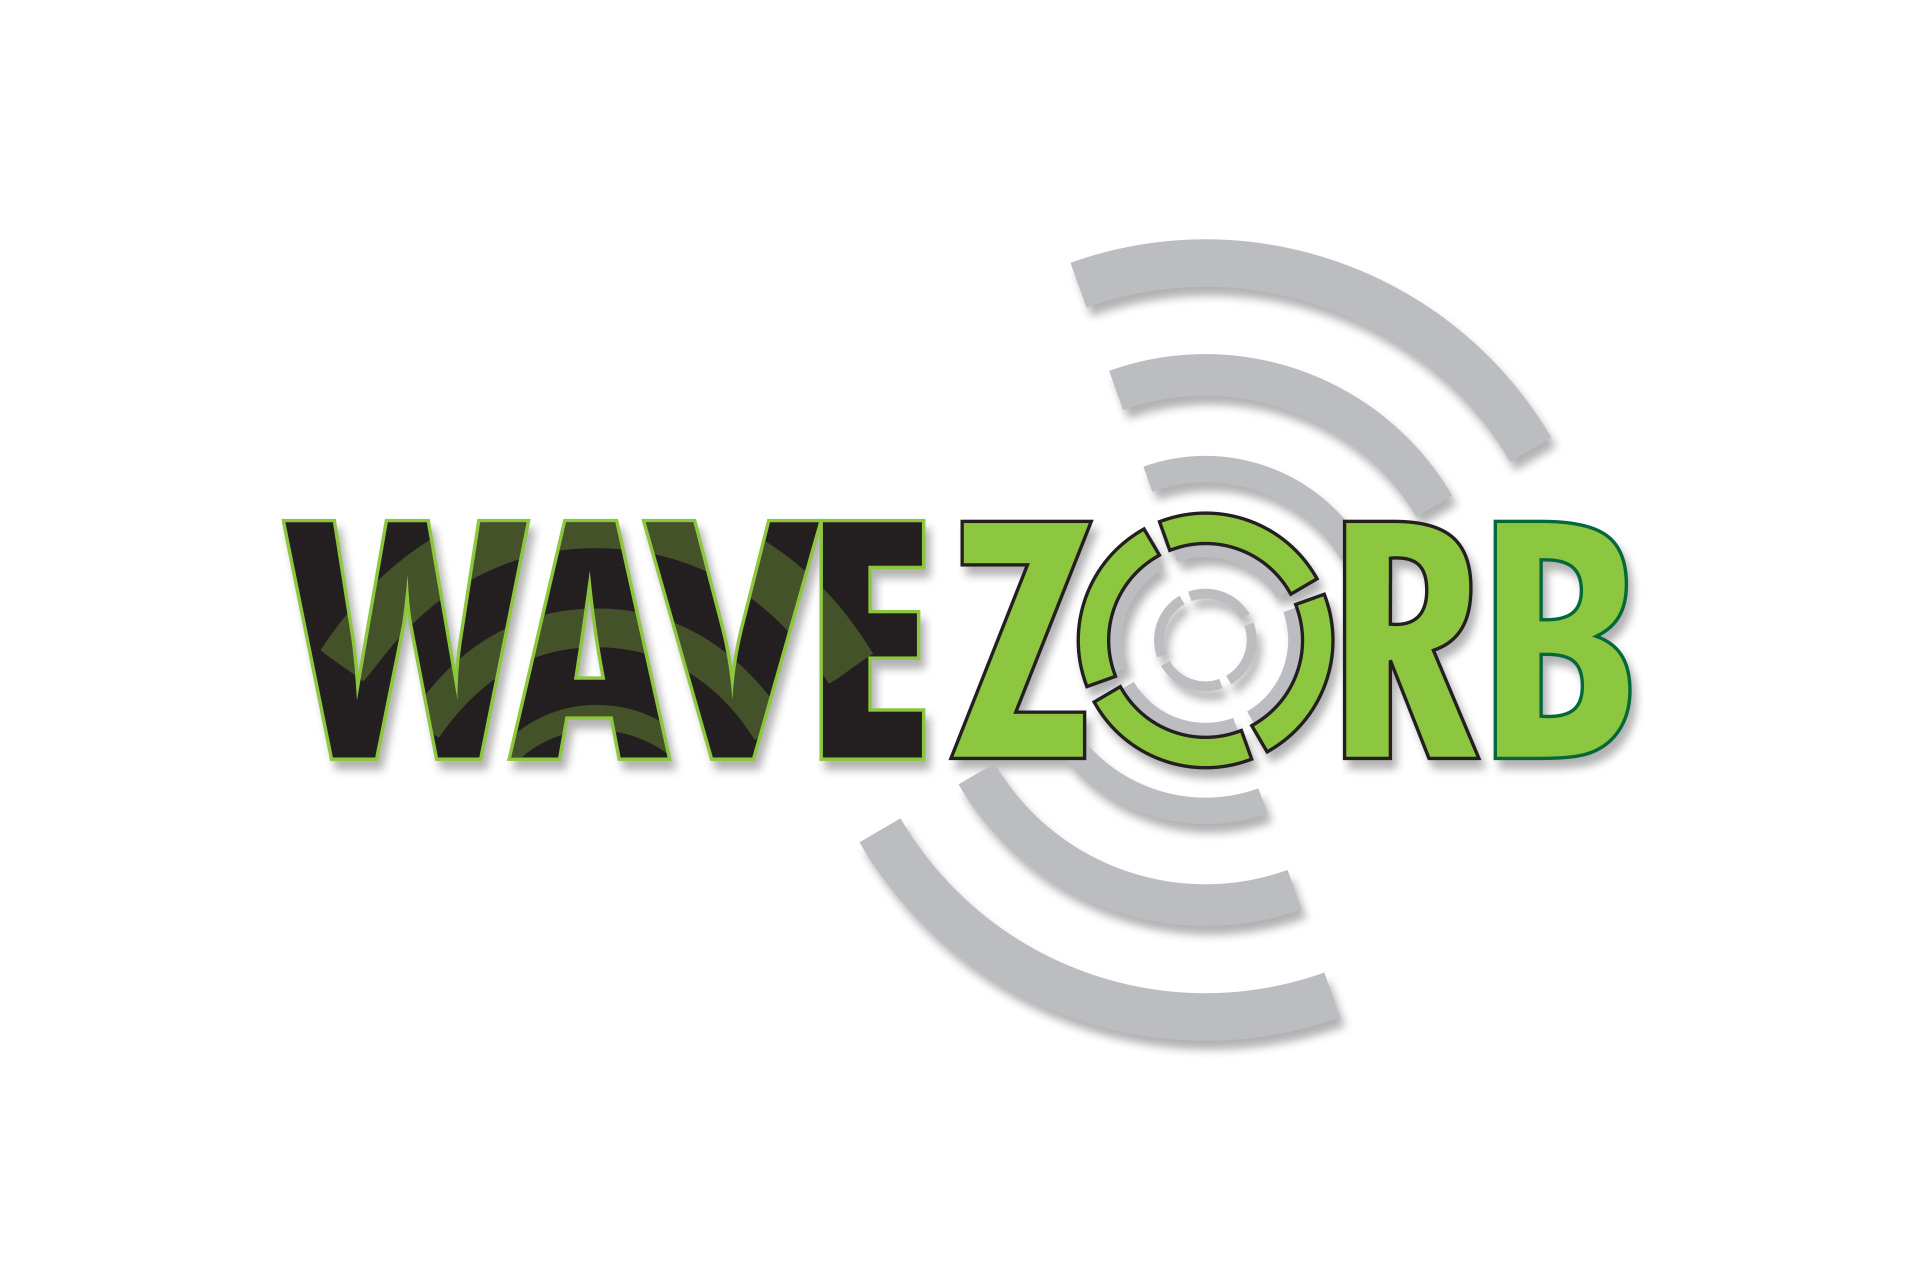 WaveZorb